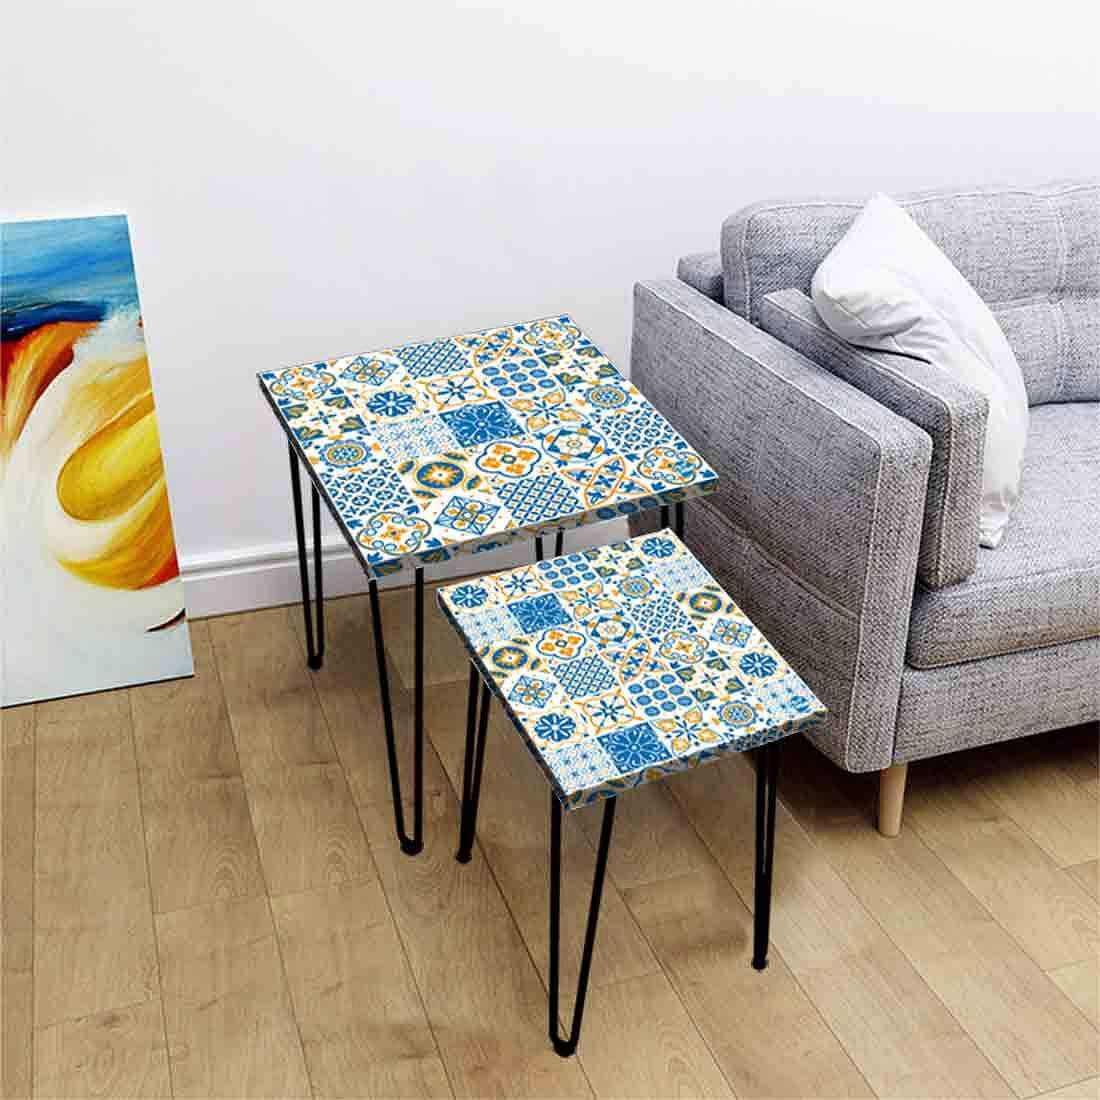 Nesting Coffee End Tables Modern Decor Side Table for Living Room - Love Lisbon Nutcase